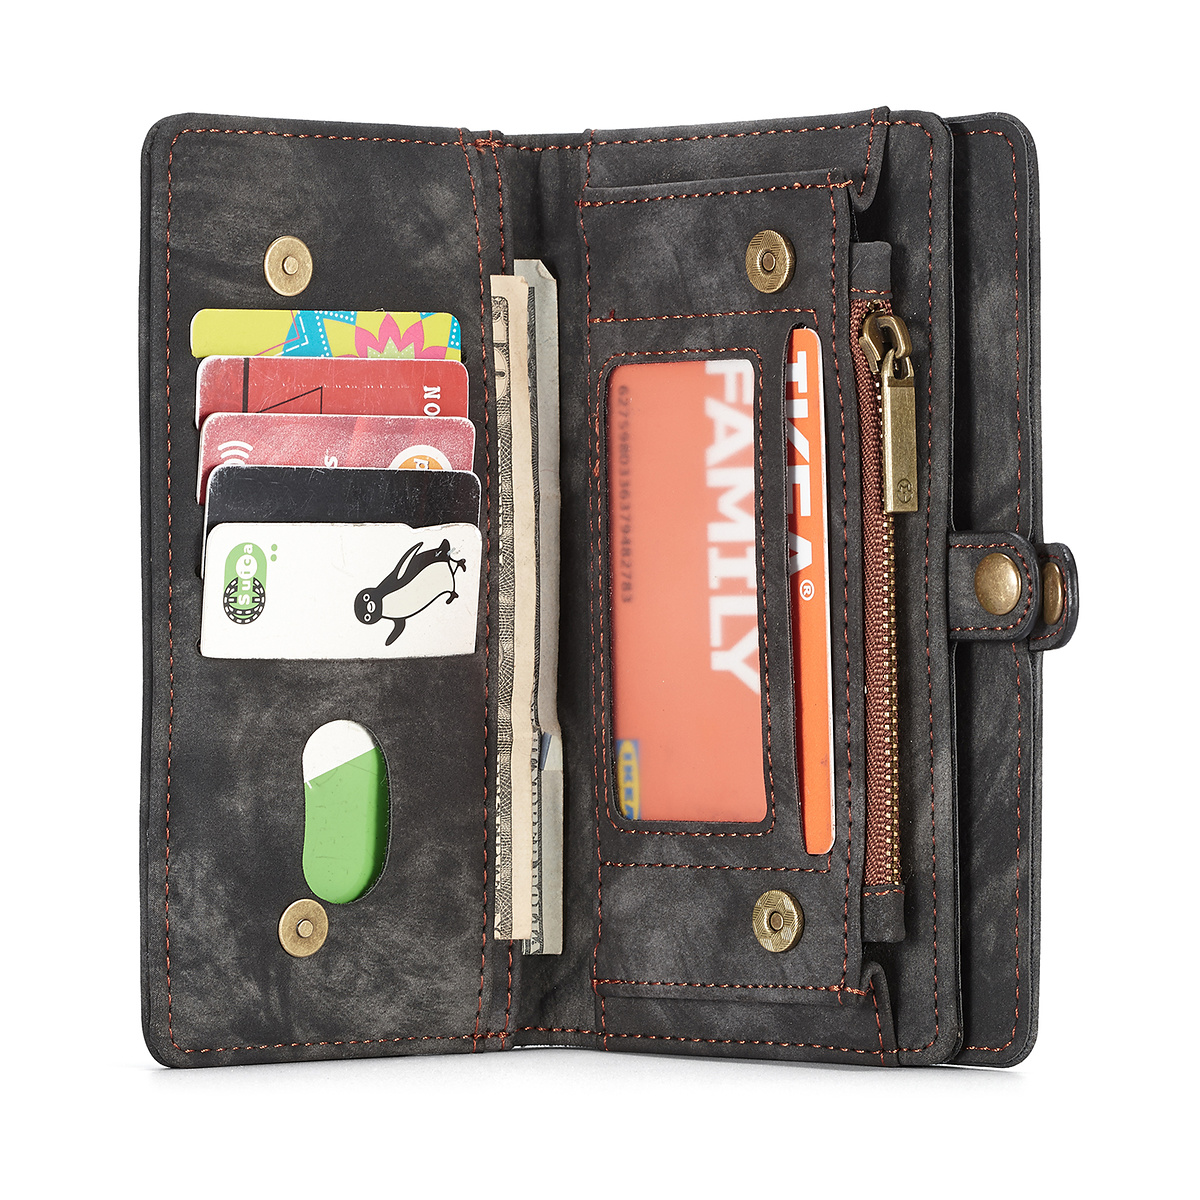 CaseMe plånboksfodral med magnetskal till iPhone X/XS, svart